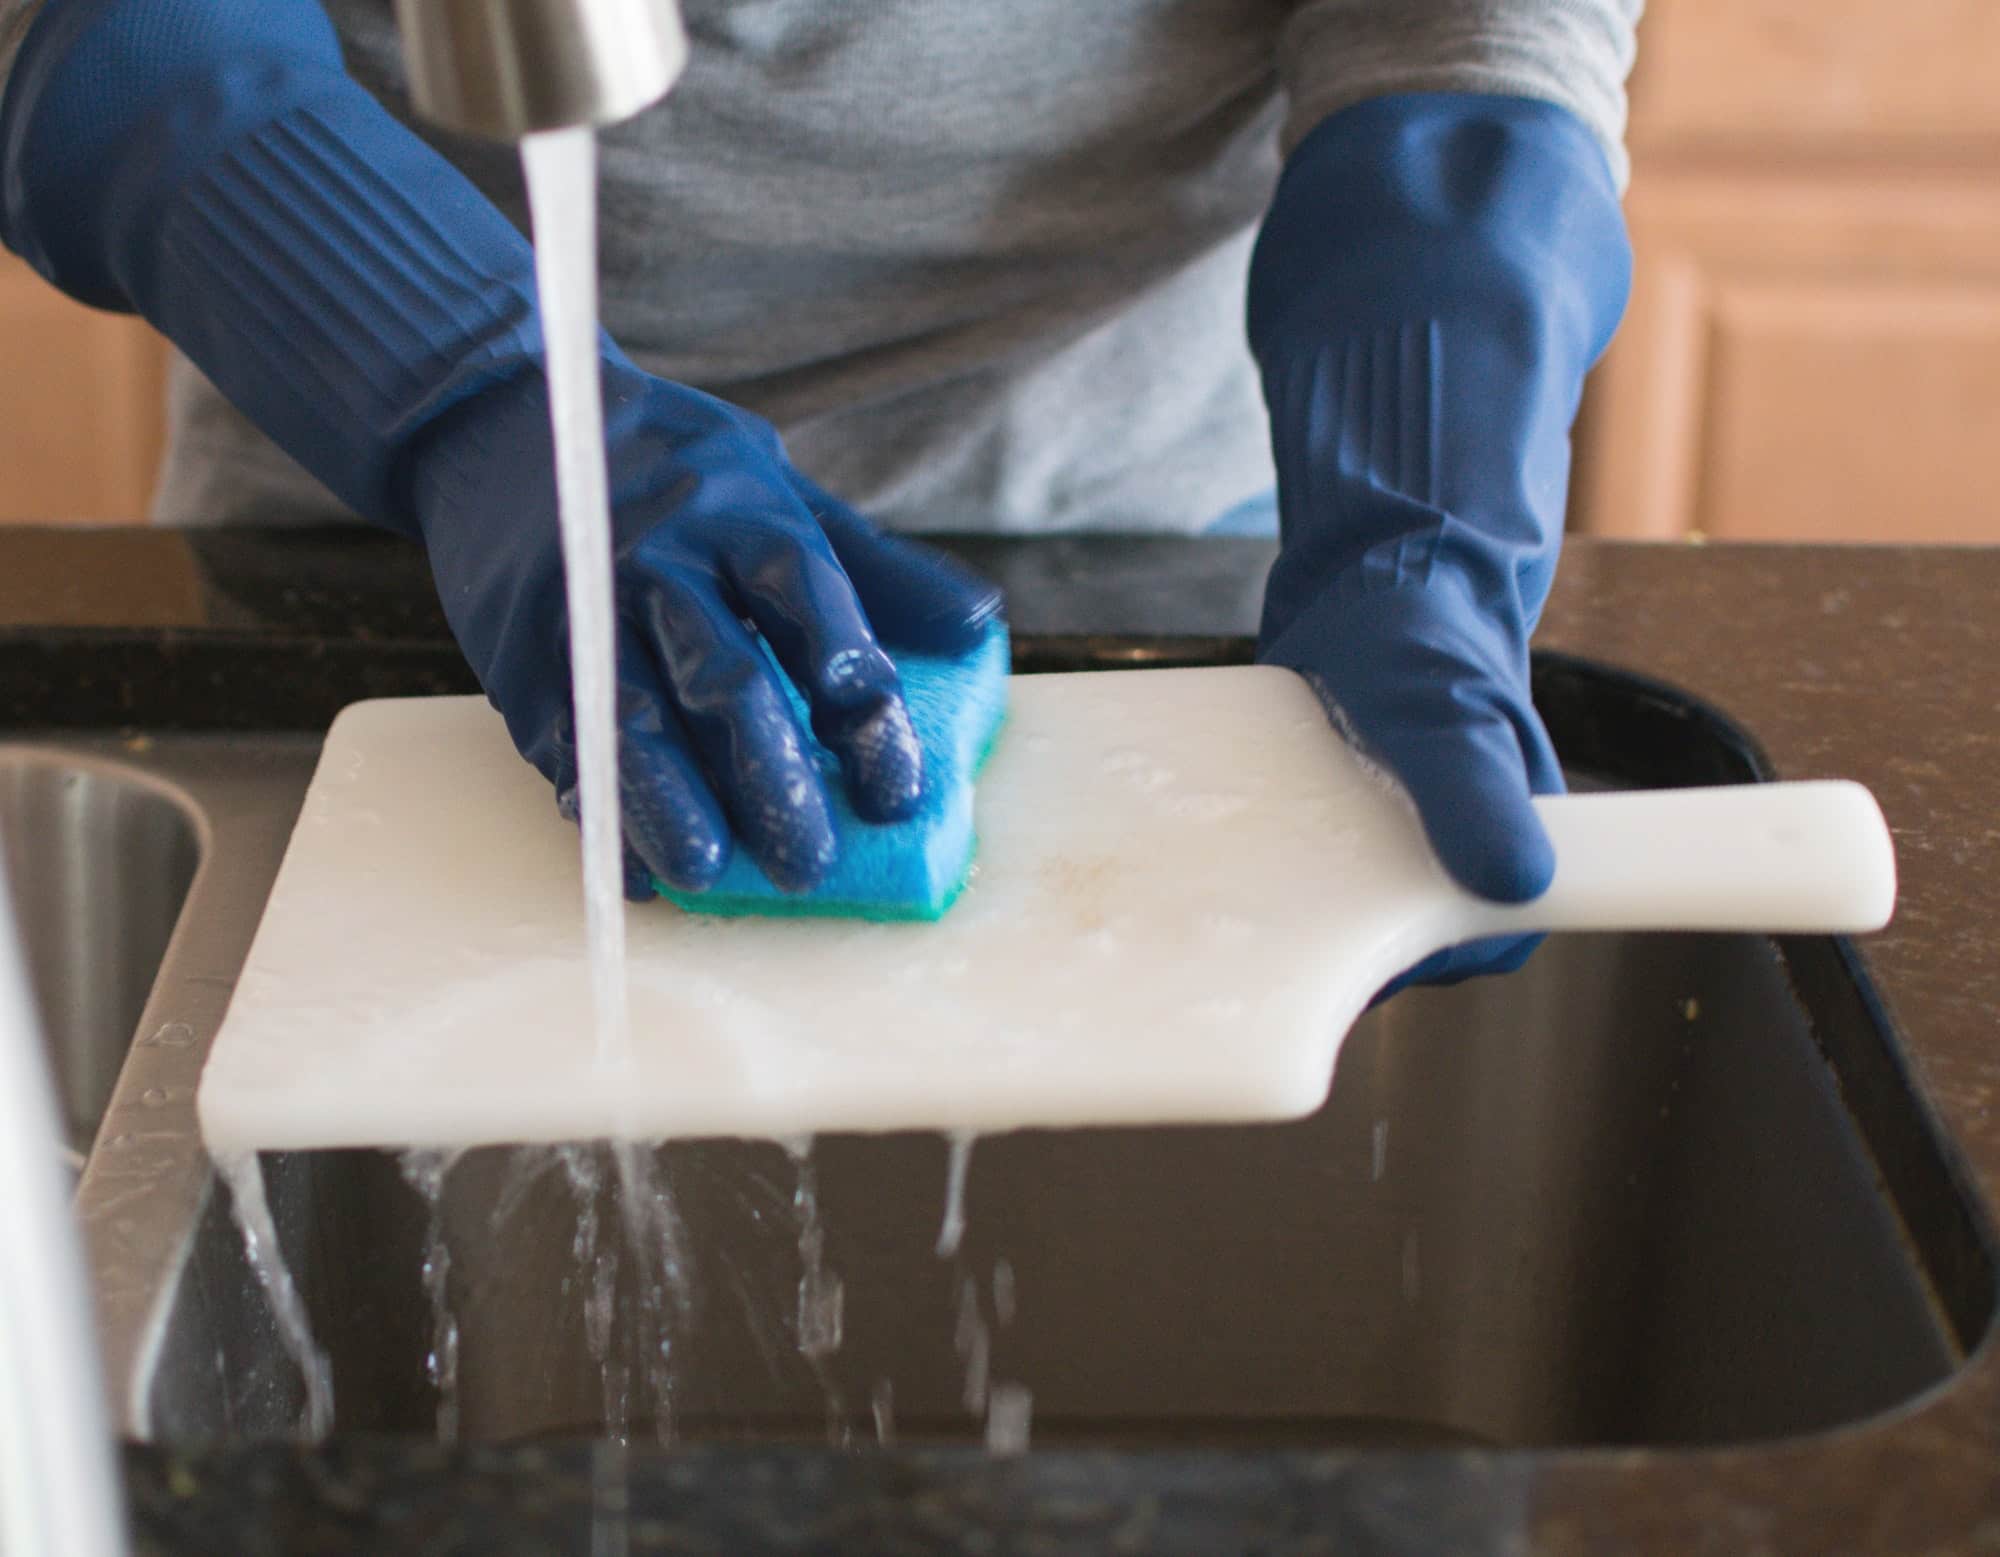 A man hand washing a chopping board in the kitchen.